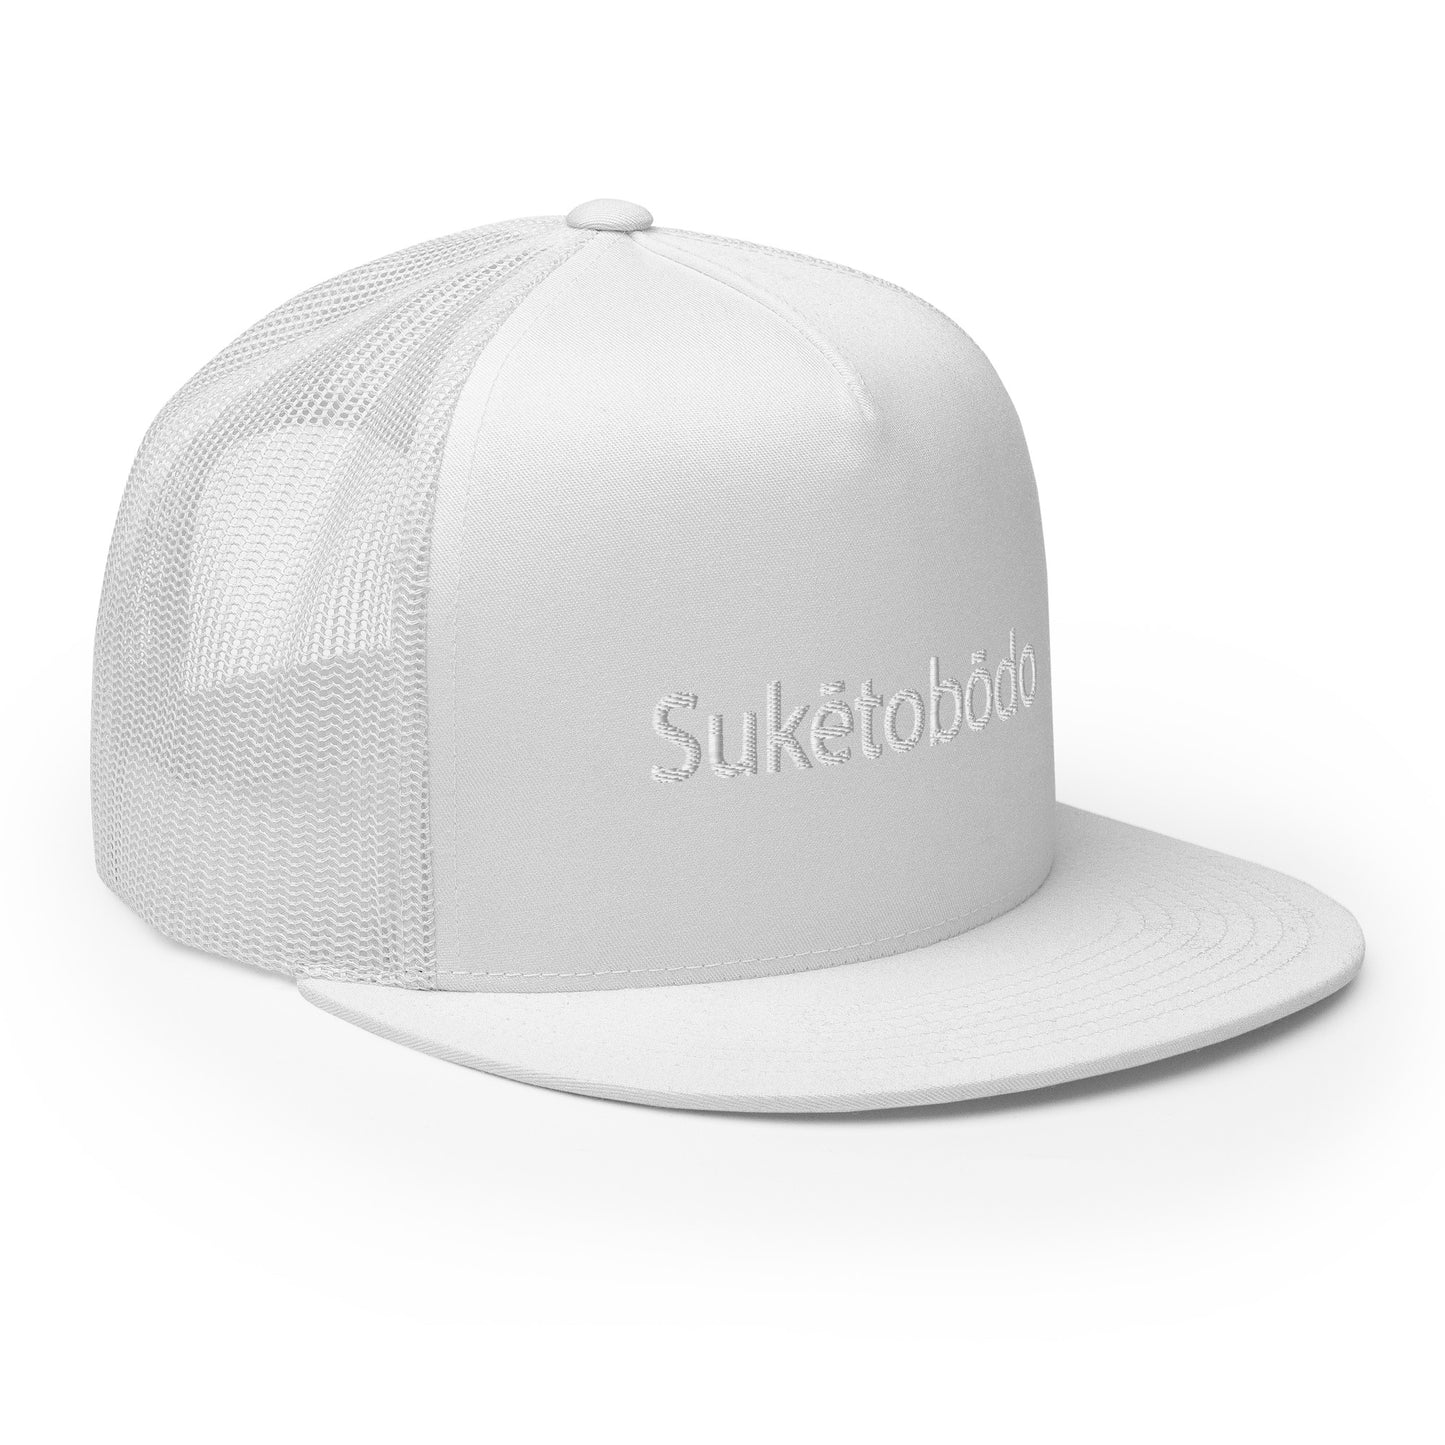 Suketobodo Brand / #05 / Hat  / Trucker Cap II